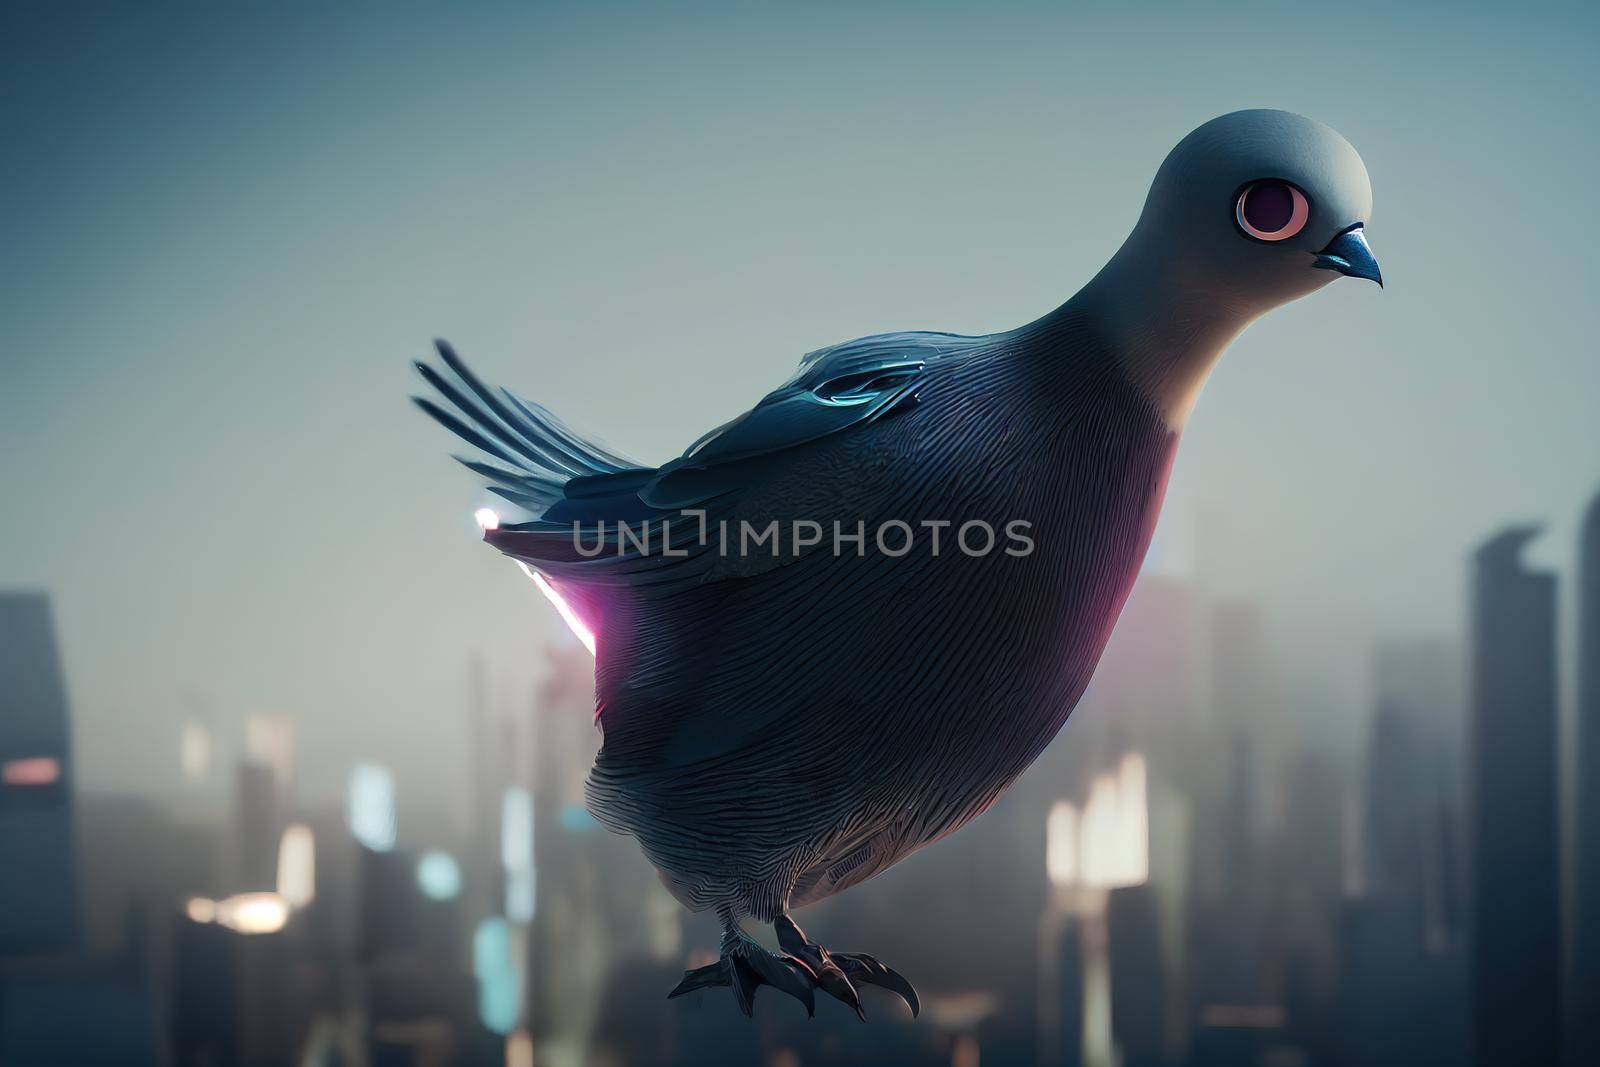 Futuristic pigeon character cartoon stylised. High quality 3d illustration